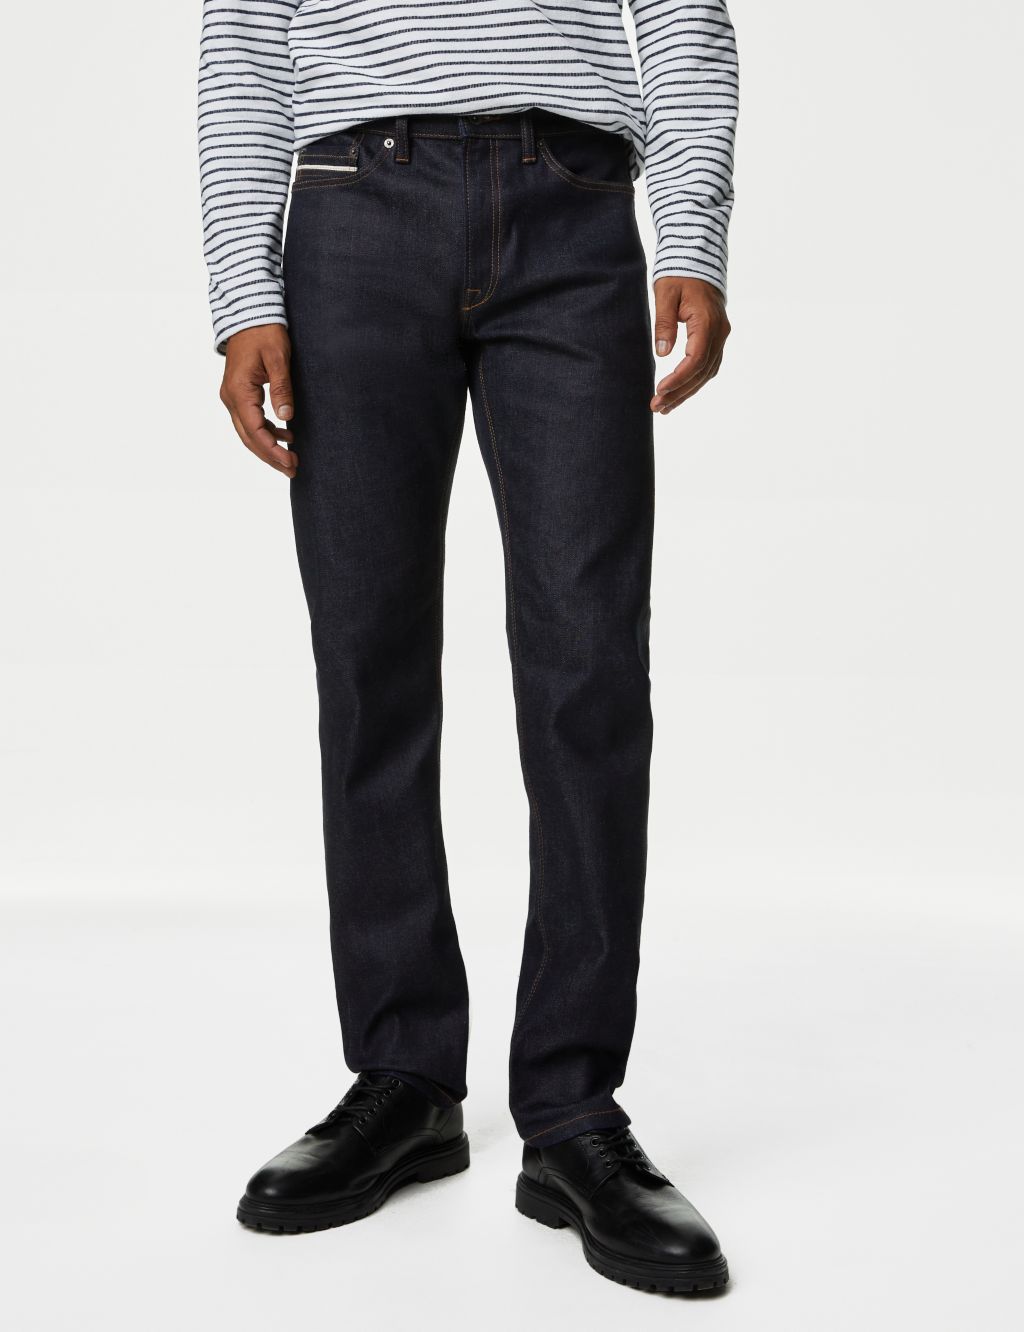 Men's Slim Fit Jeans | M&S